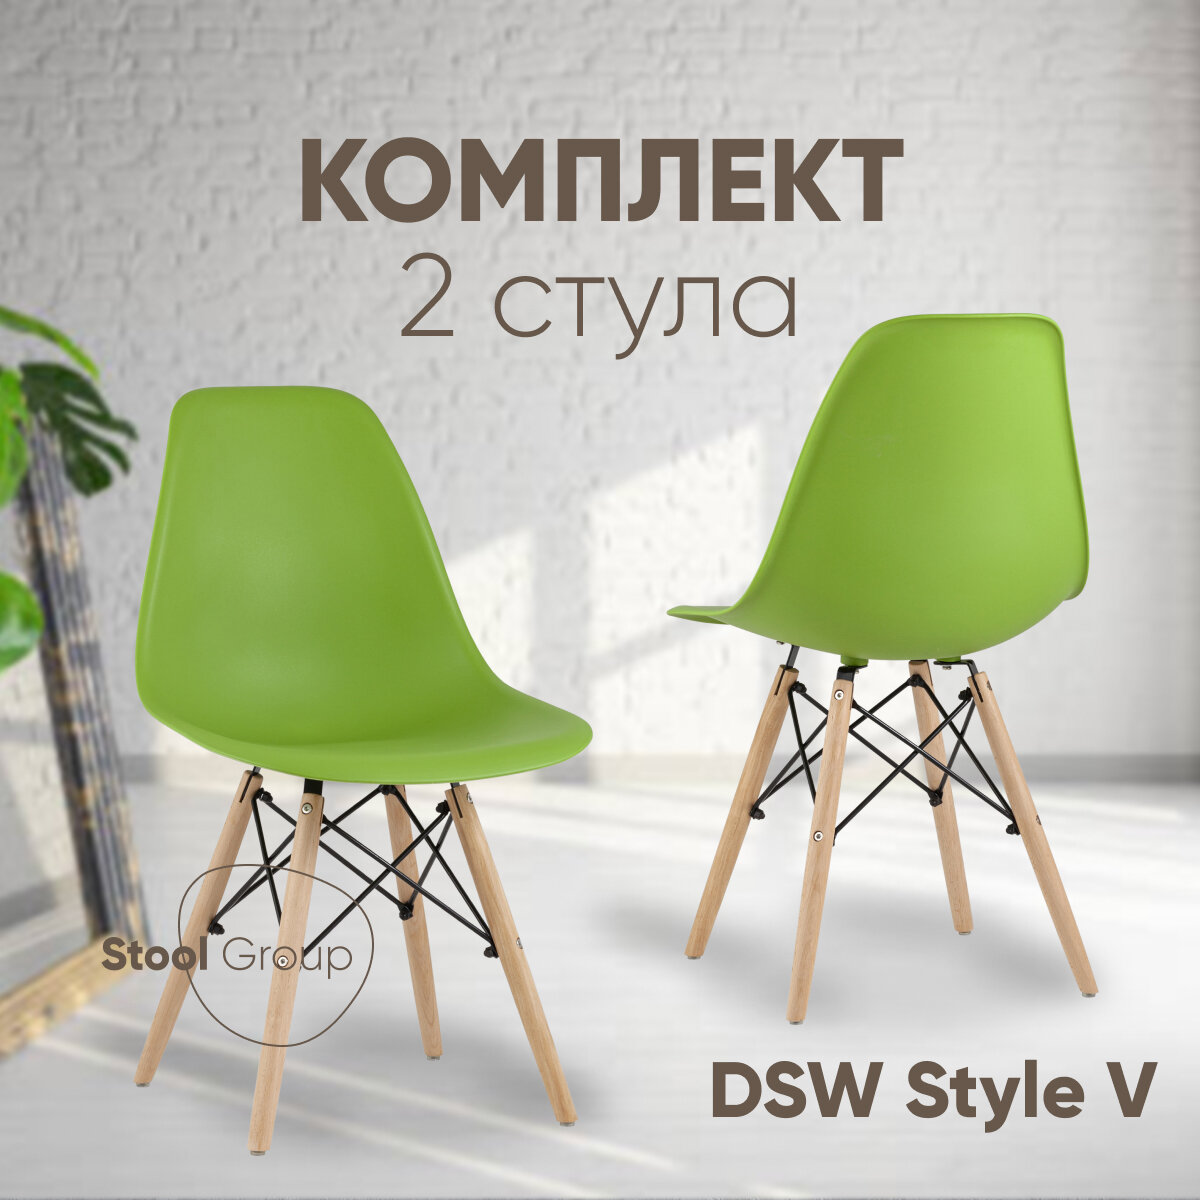 Стул для кухни DSW Style V, зеленый (комплект 2 стула)